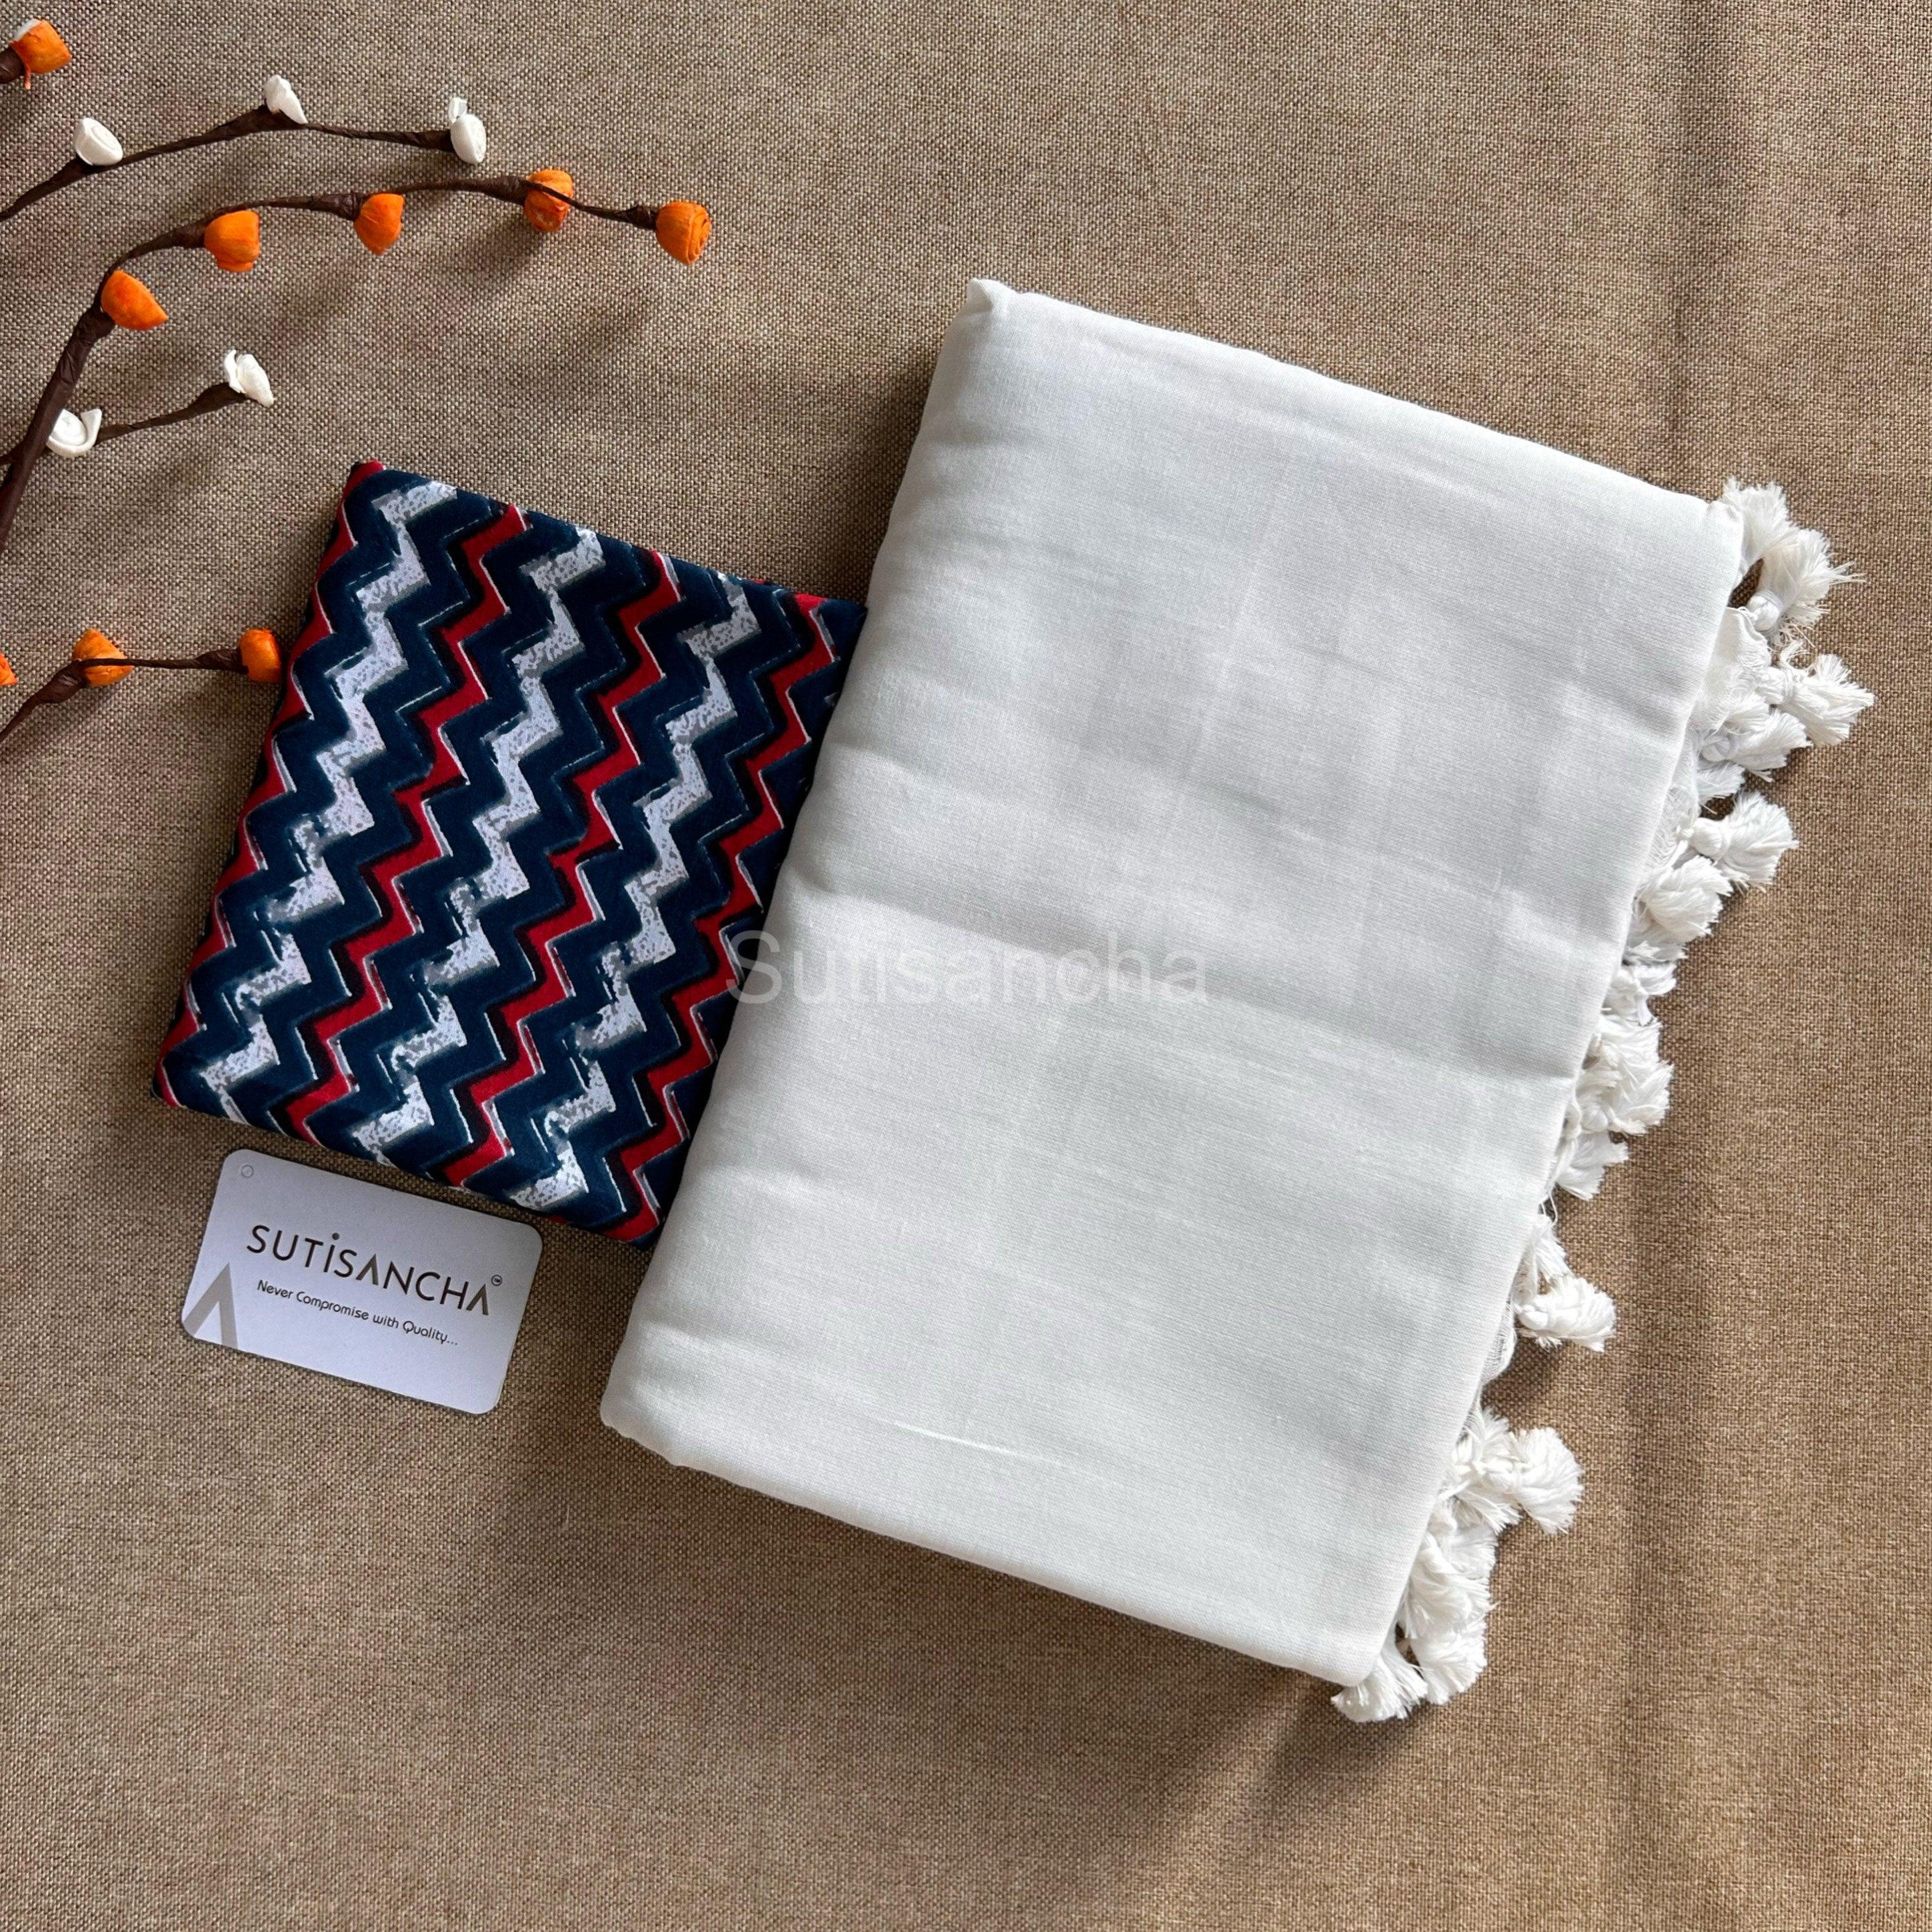 Sutisancha white Khadi Saree & Cotton Design Blouse - Suti Sancha